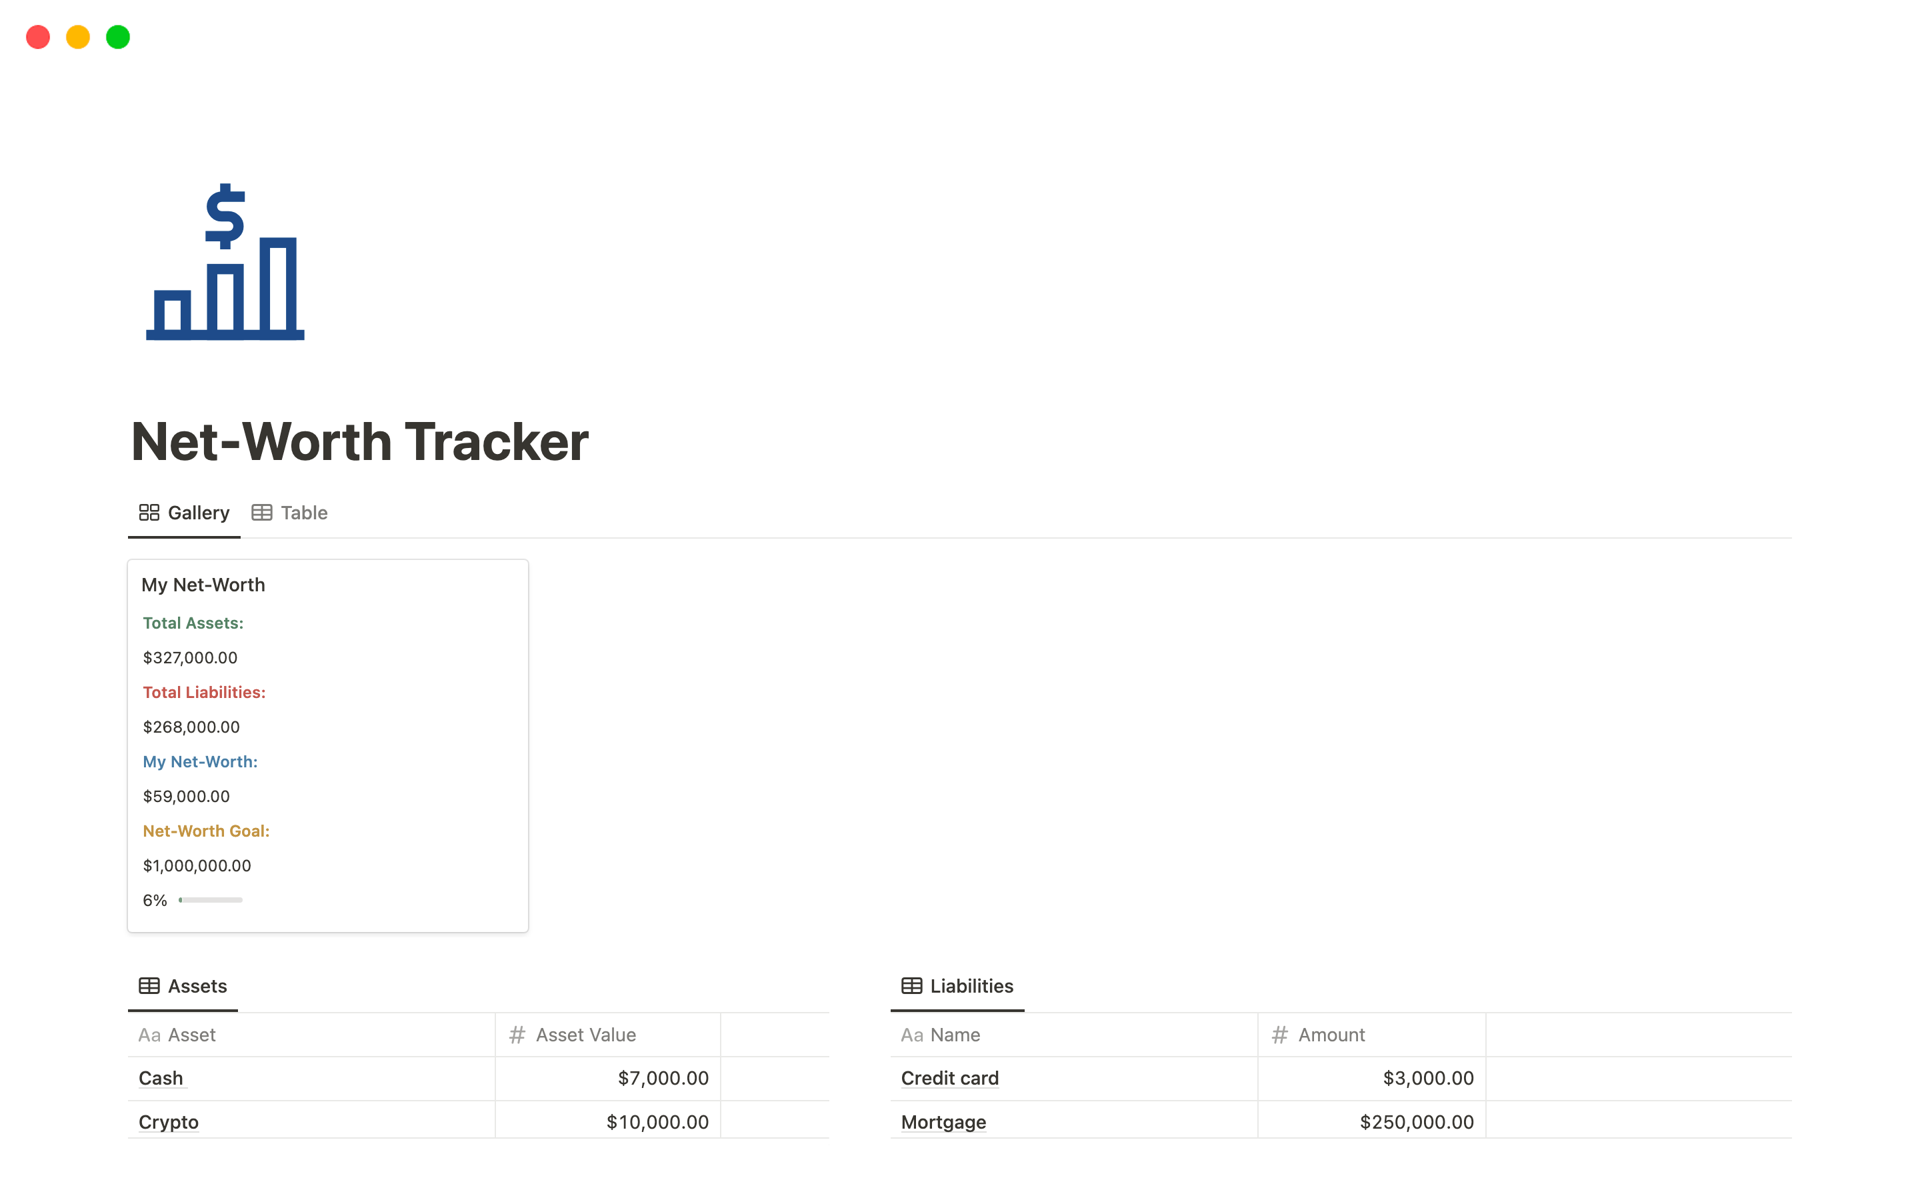 Vista previa de plantilla para Net-Worth Tracker